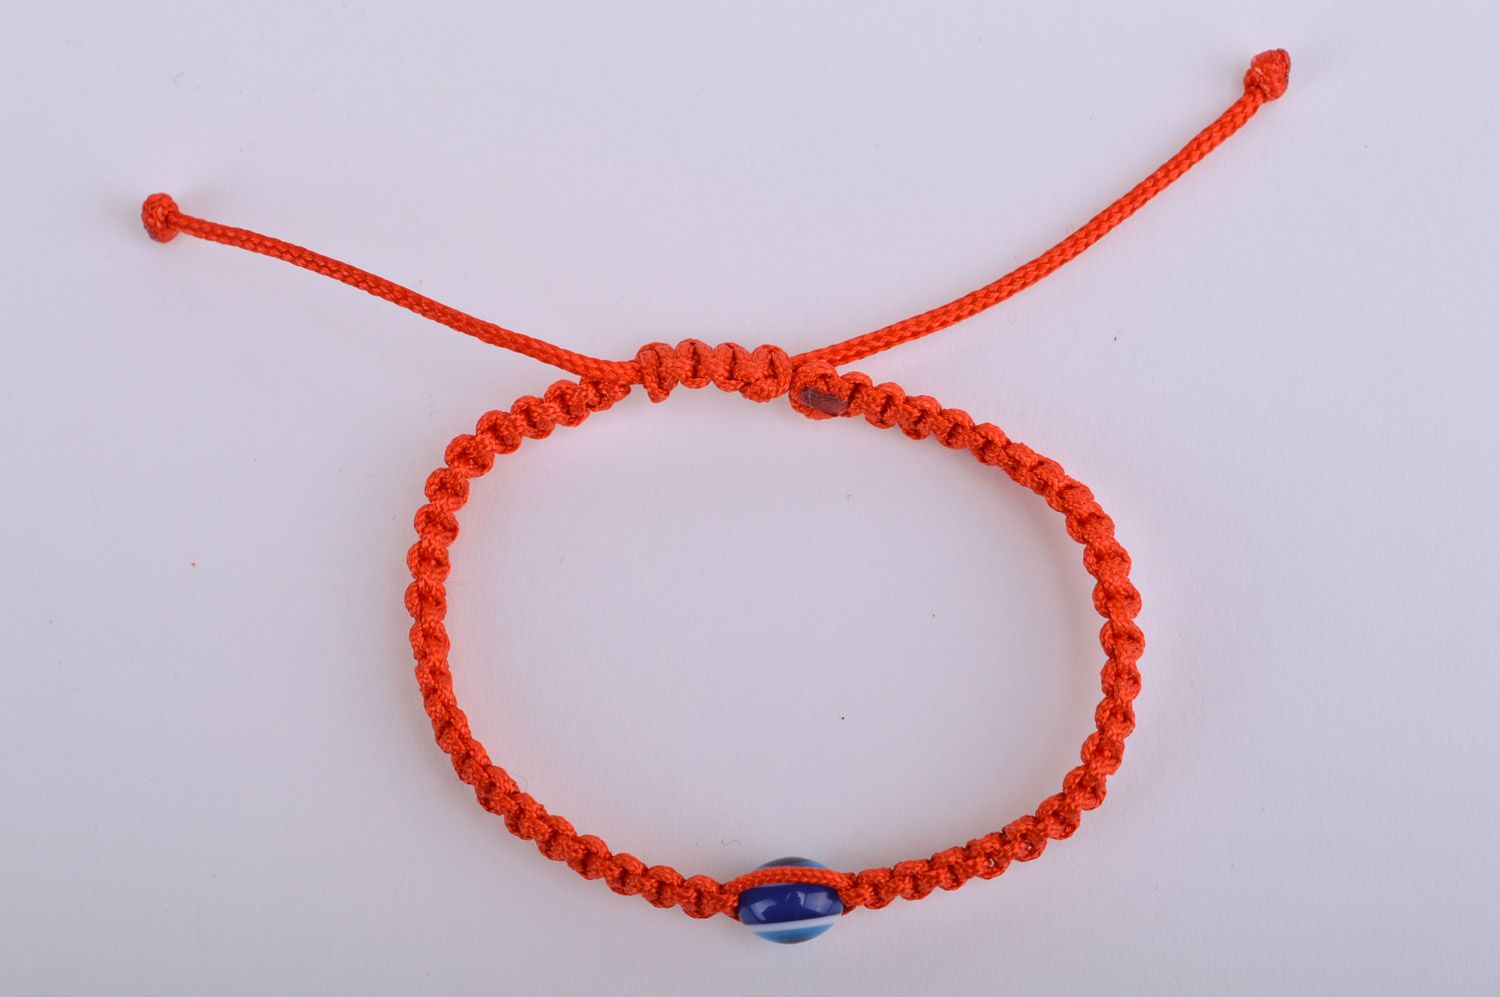 Braided handmade red wrist bracelet made of threads against the evil eye photo 5